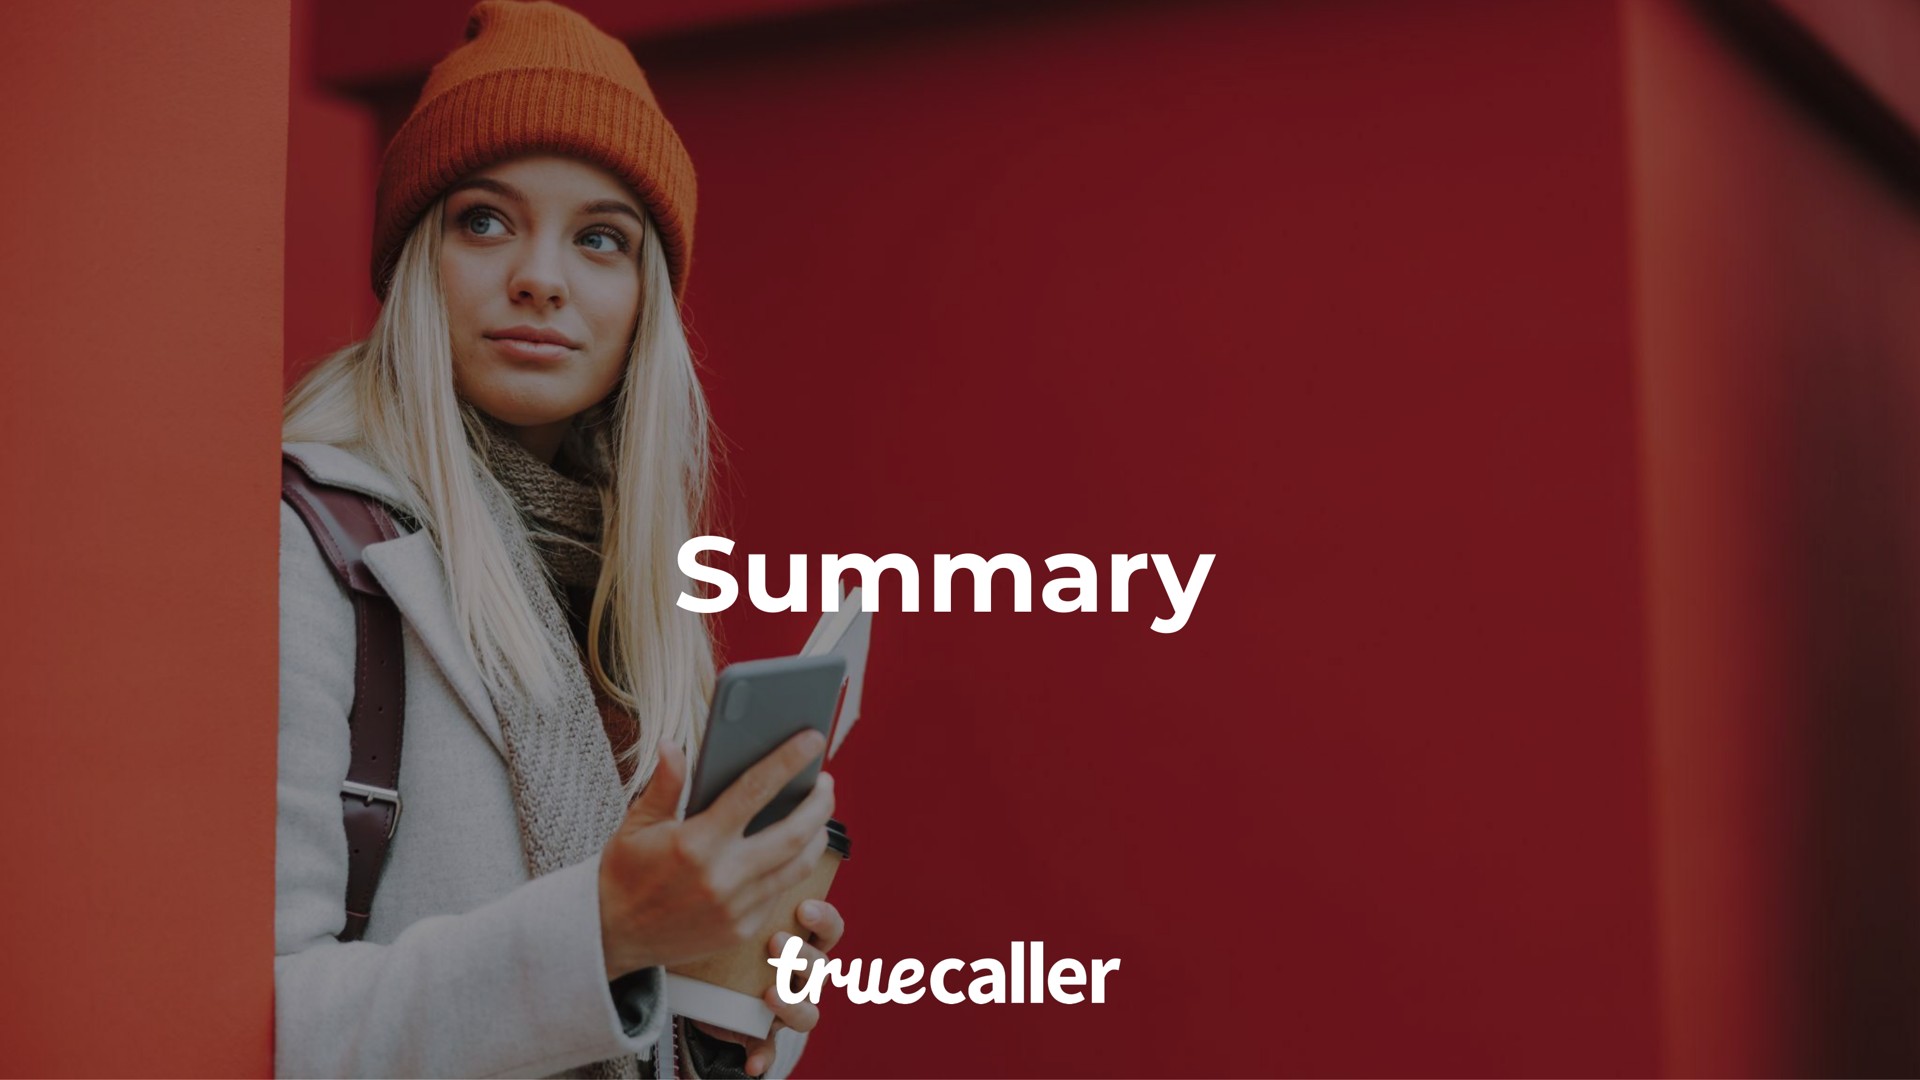 summary mary caller | Truecaller